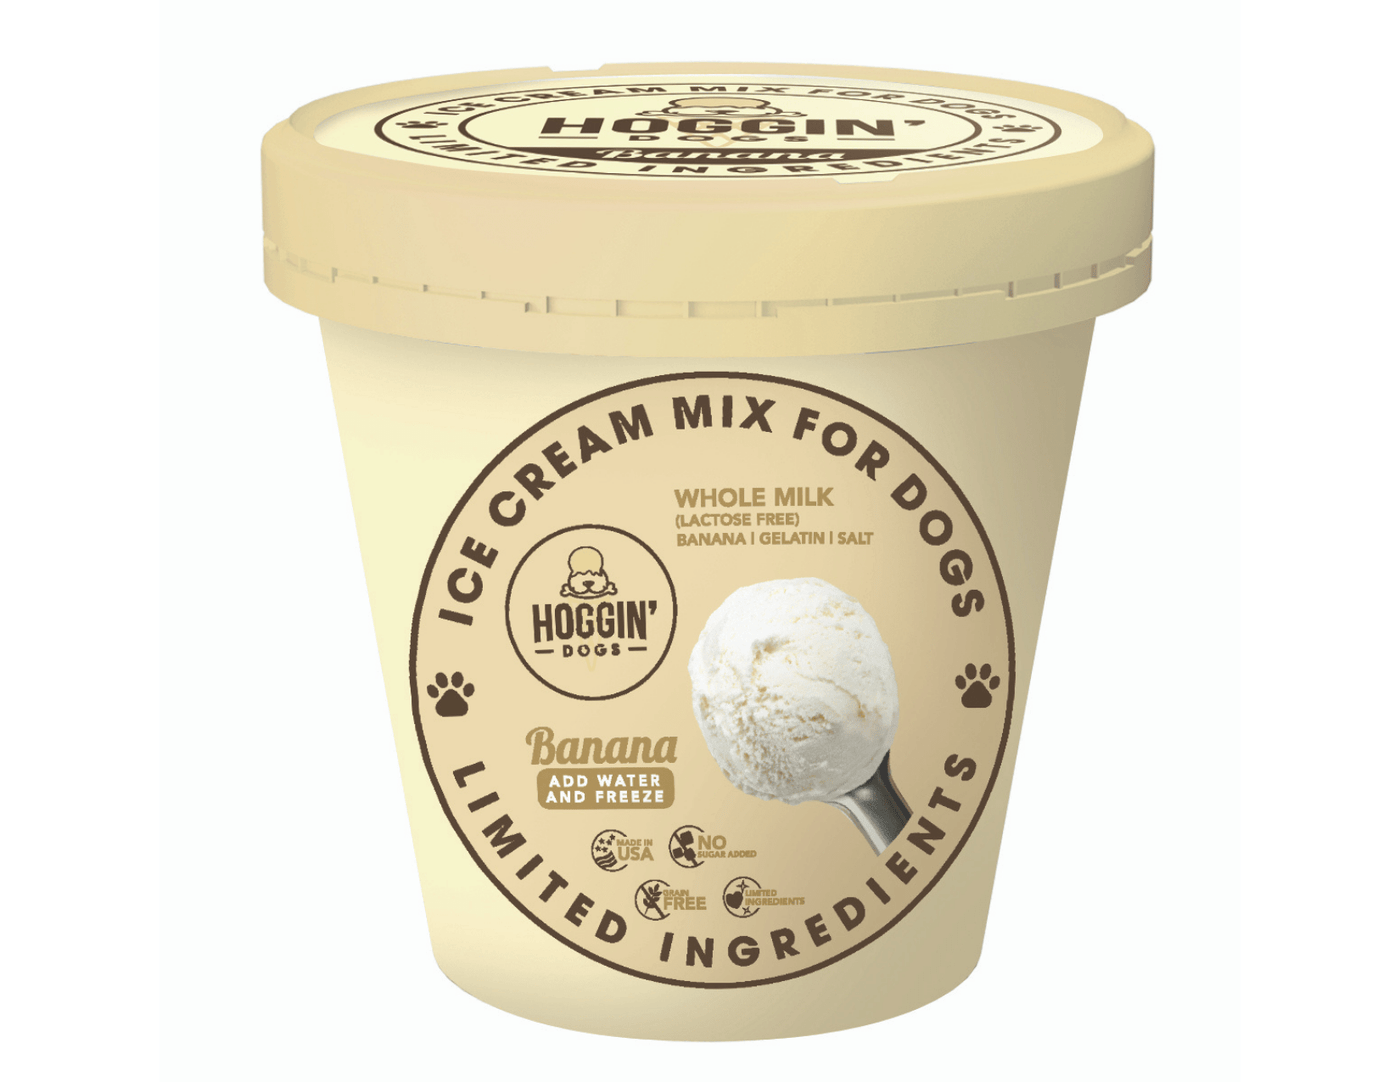 Hoggin' Dogs Ice Cream Mix - Banana